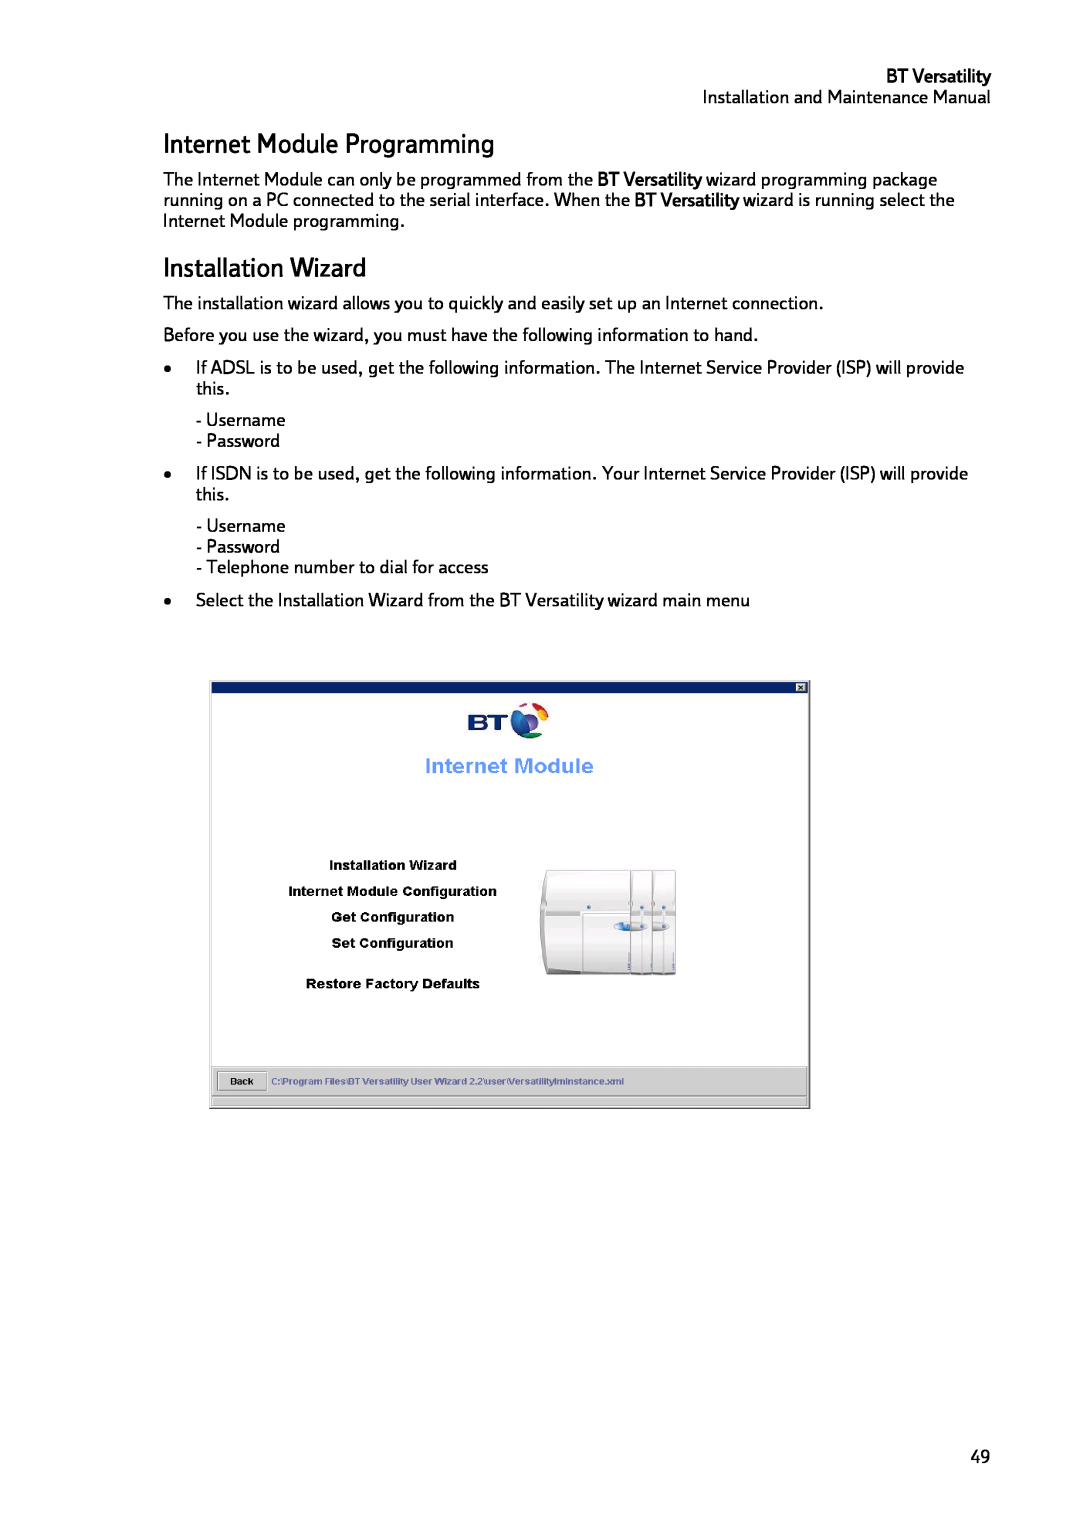 BT BT Versatility manual Internet Module Programming, Installation Wizard 